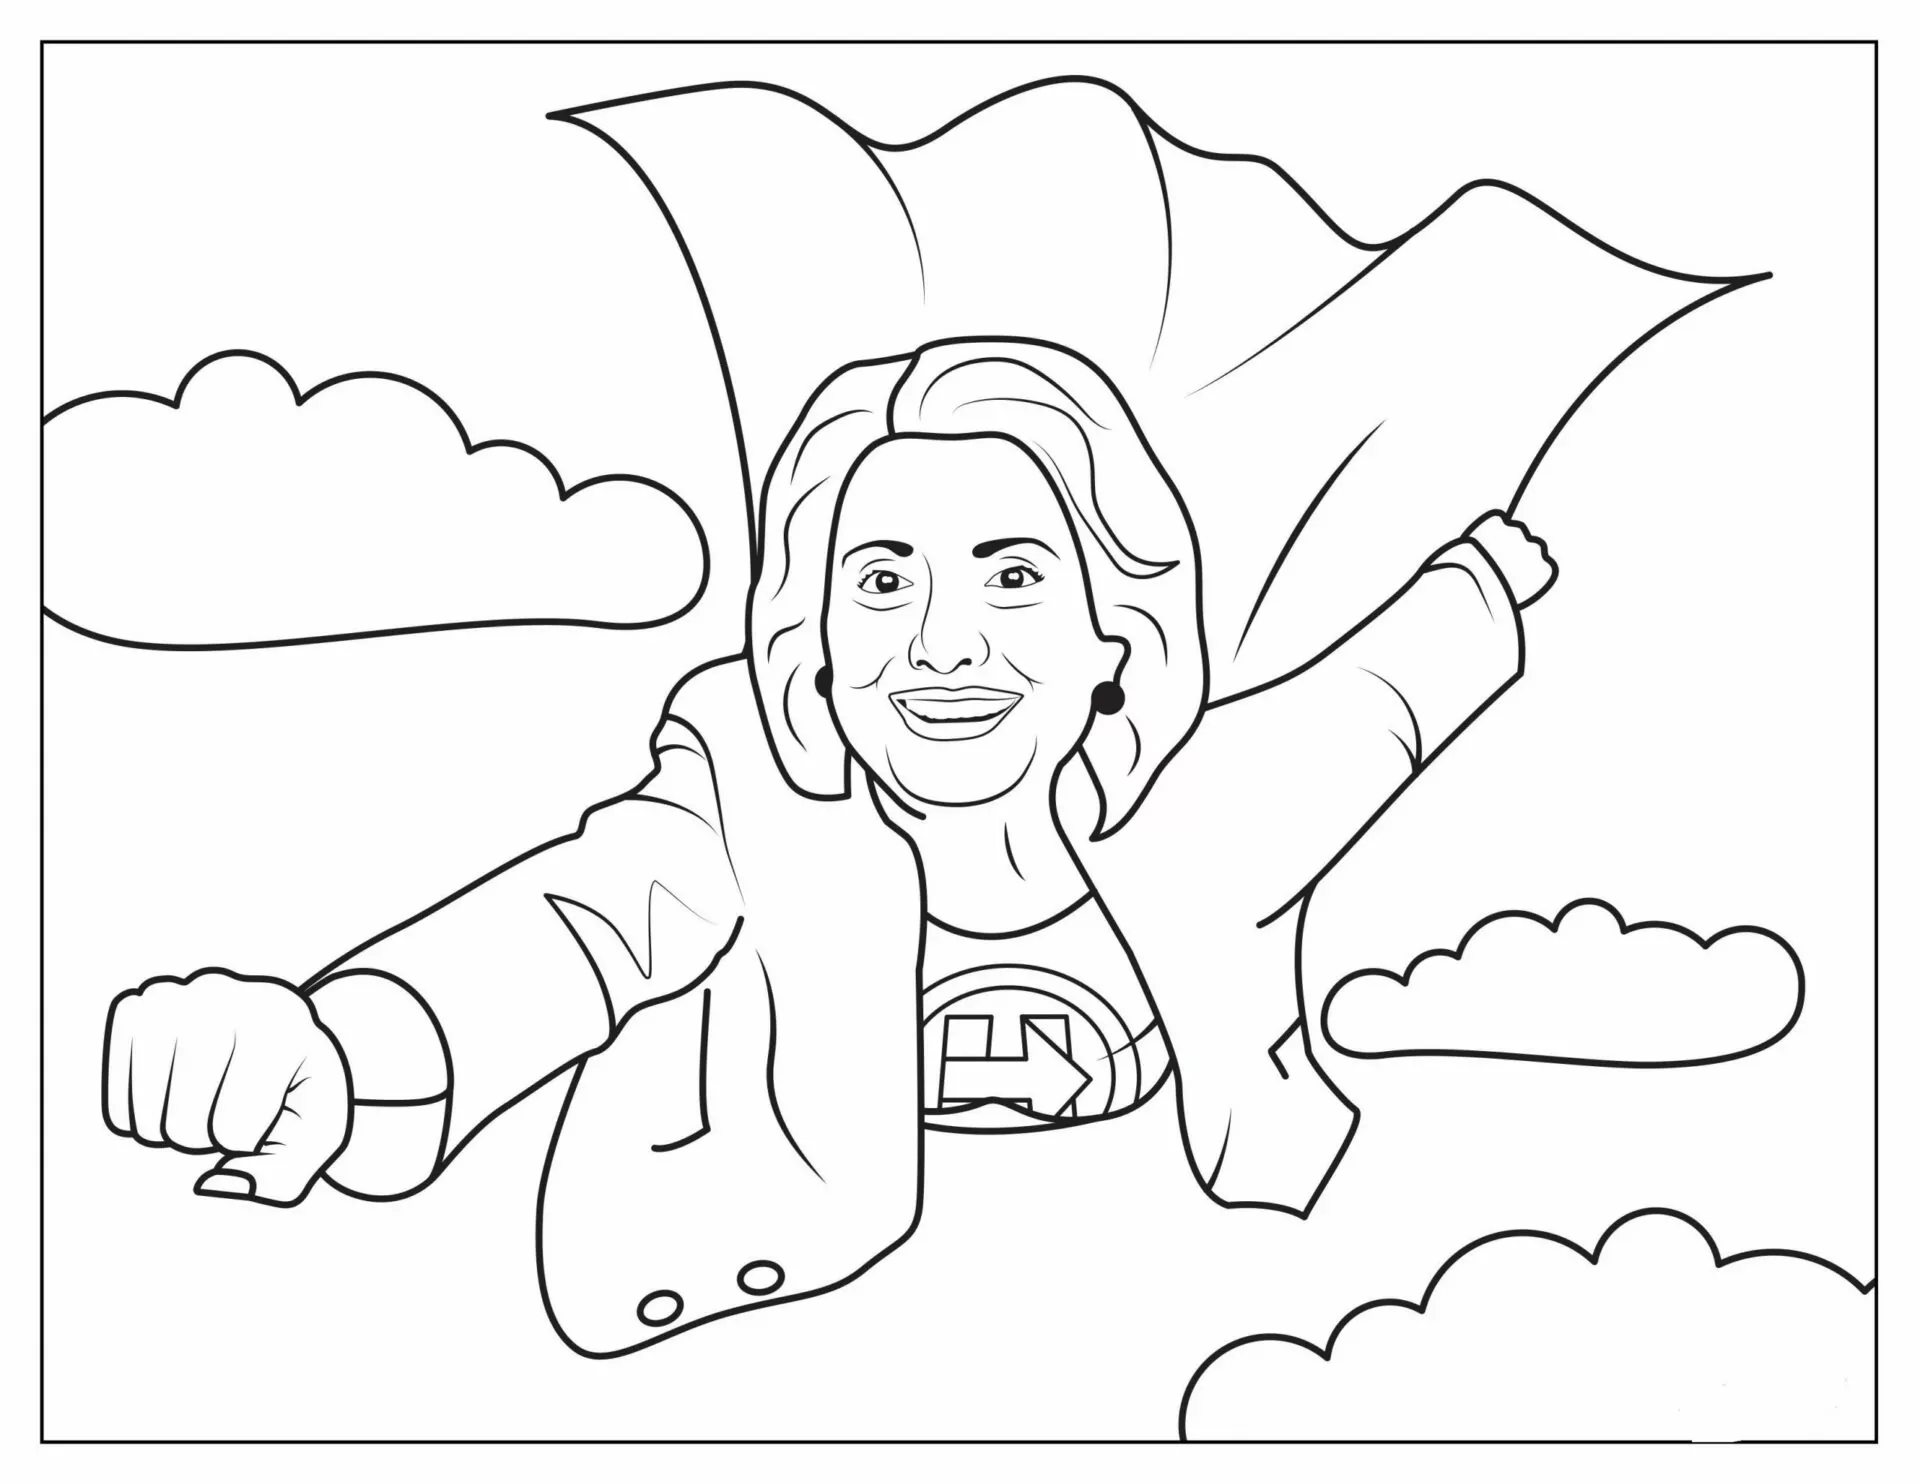 Hillary Clinton Flying